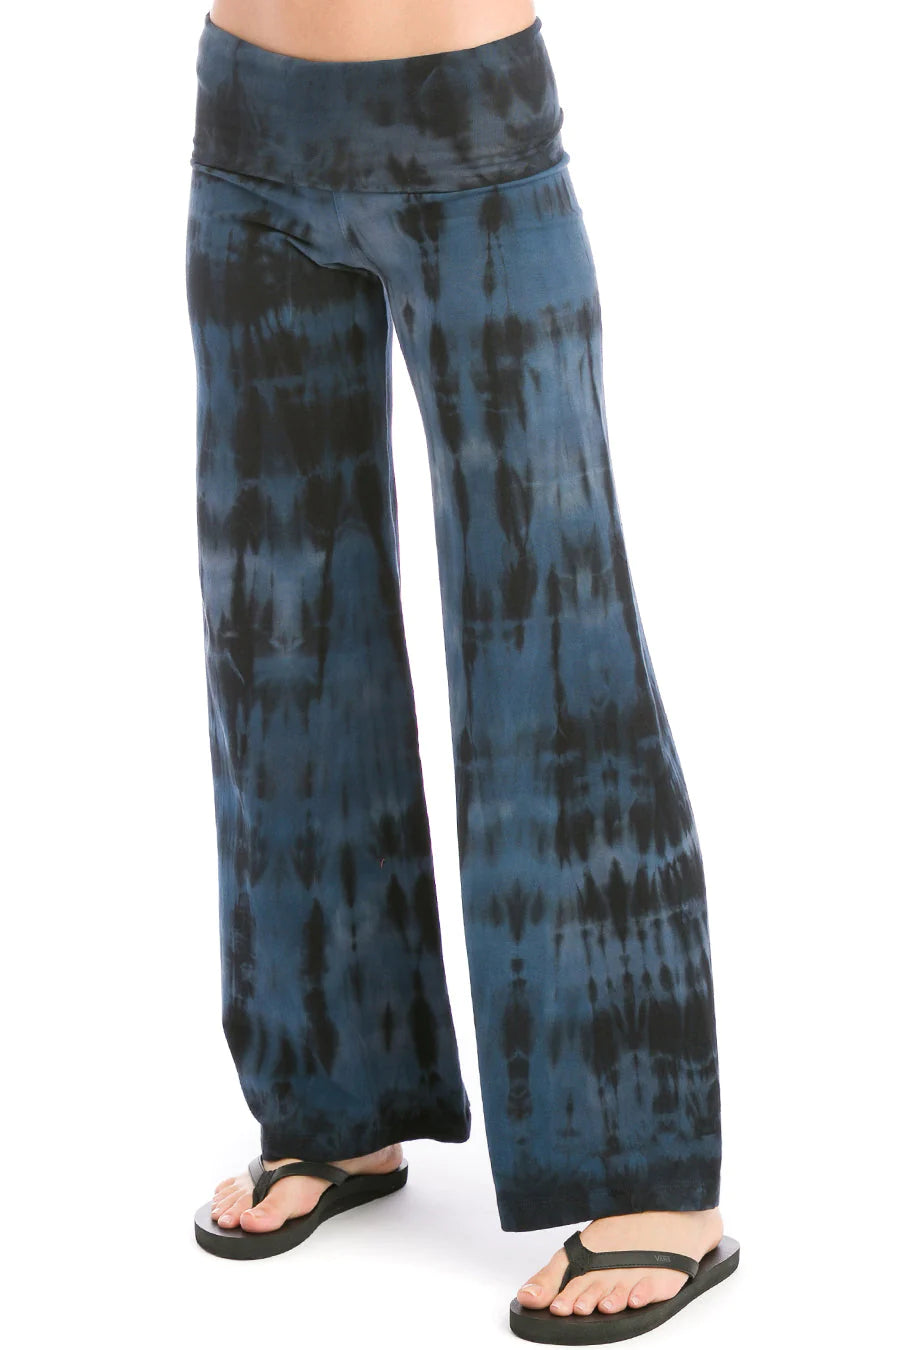 Hardtail Yoga Pants: Premium Quality Yoga Clothing - DoYou